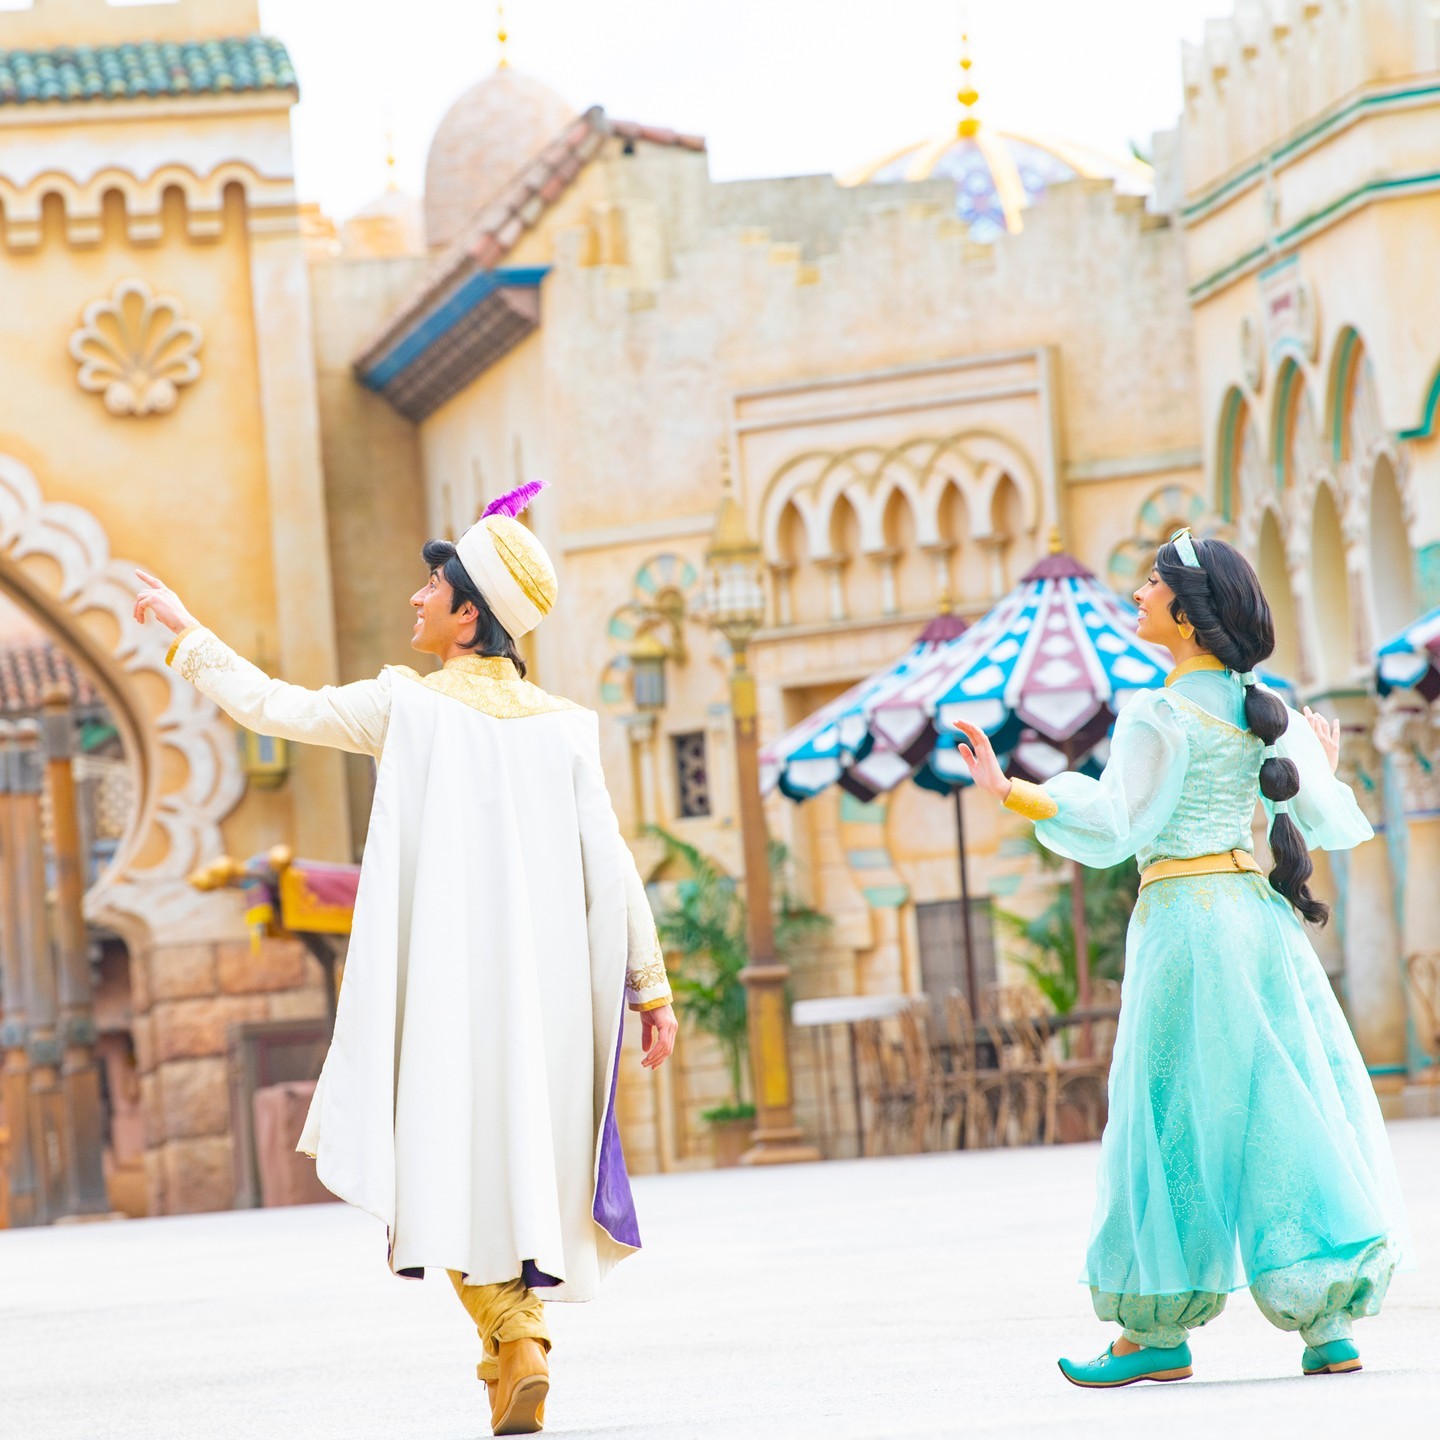 image of Aladdin,what did you find?
2人なら、どこでも素敵な発見が♡
#jasmine #aladdin #arabiancoast...